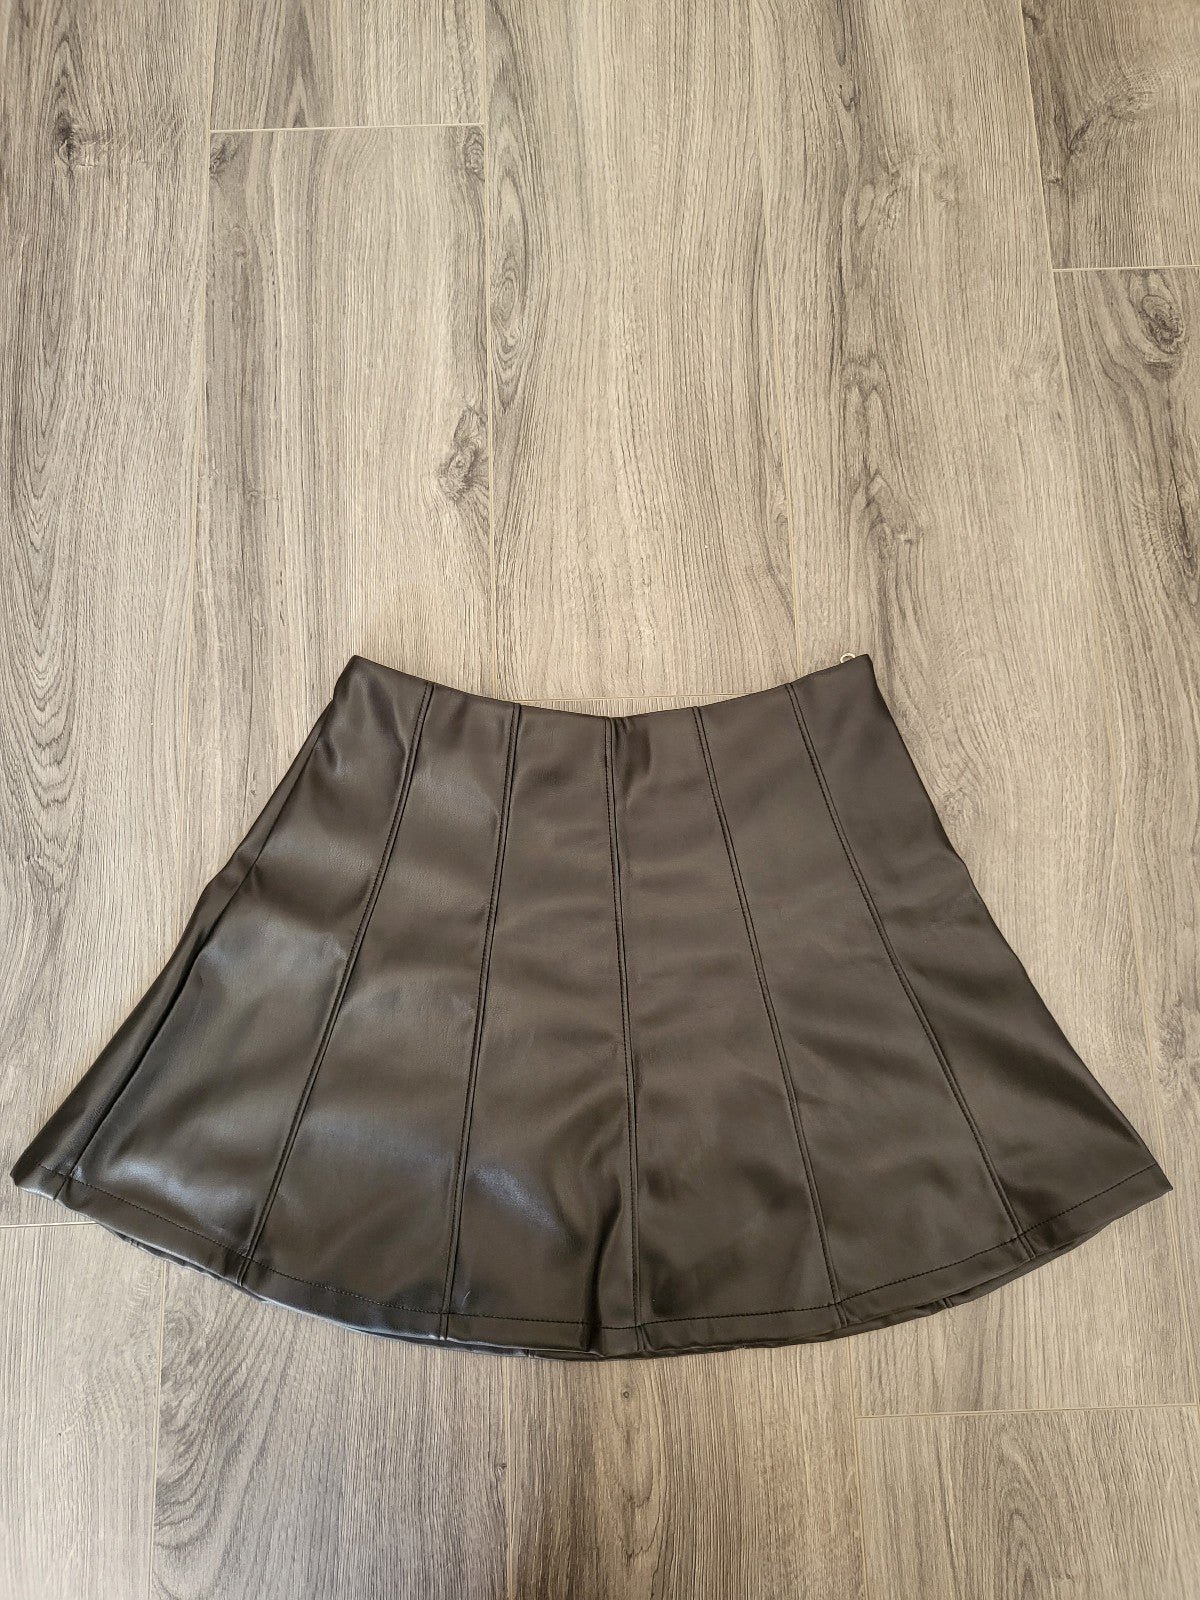 big discount Black Faux Leather Skirt nvx0nxtcH Low Pri